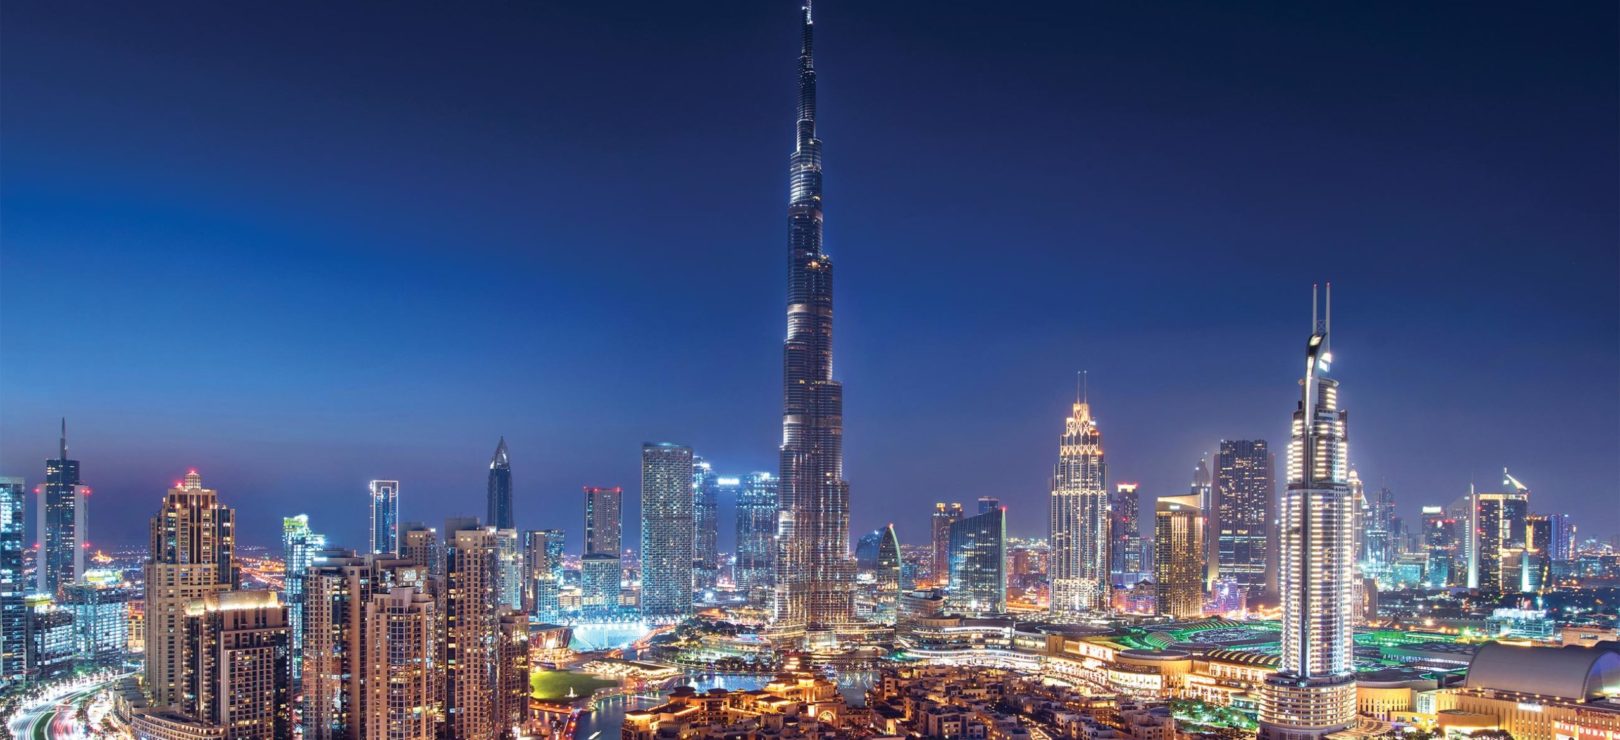 Burj Khalifa Downtown Dubai